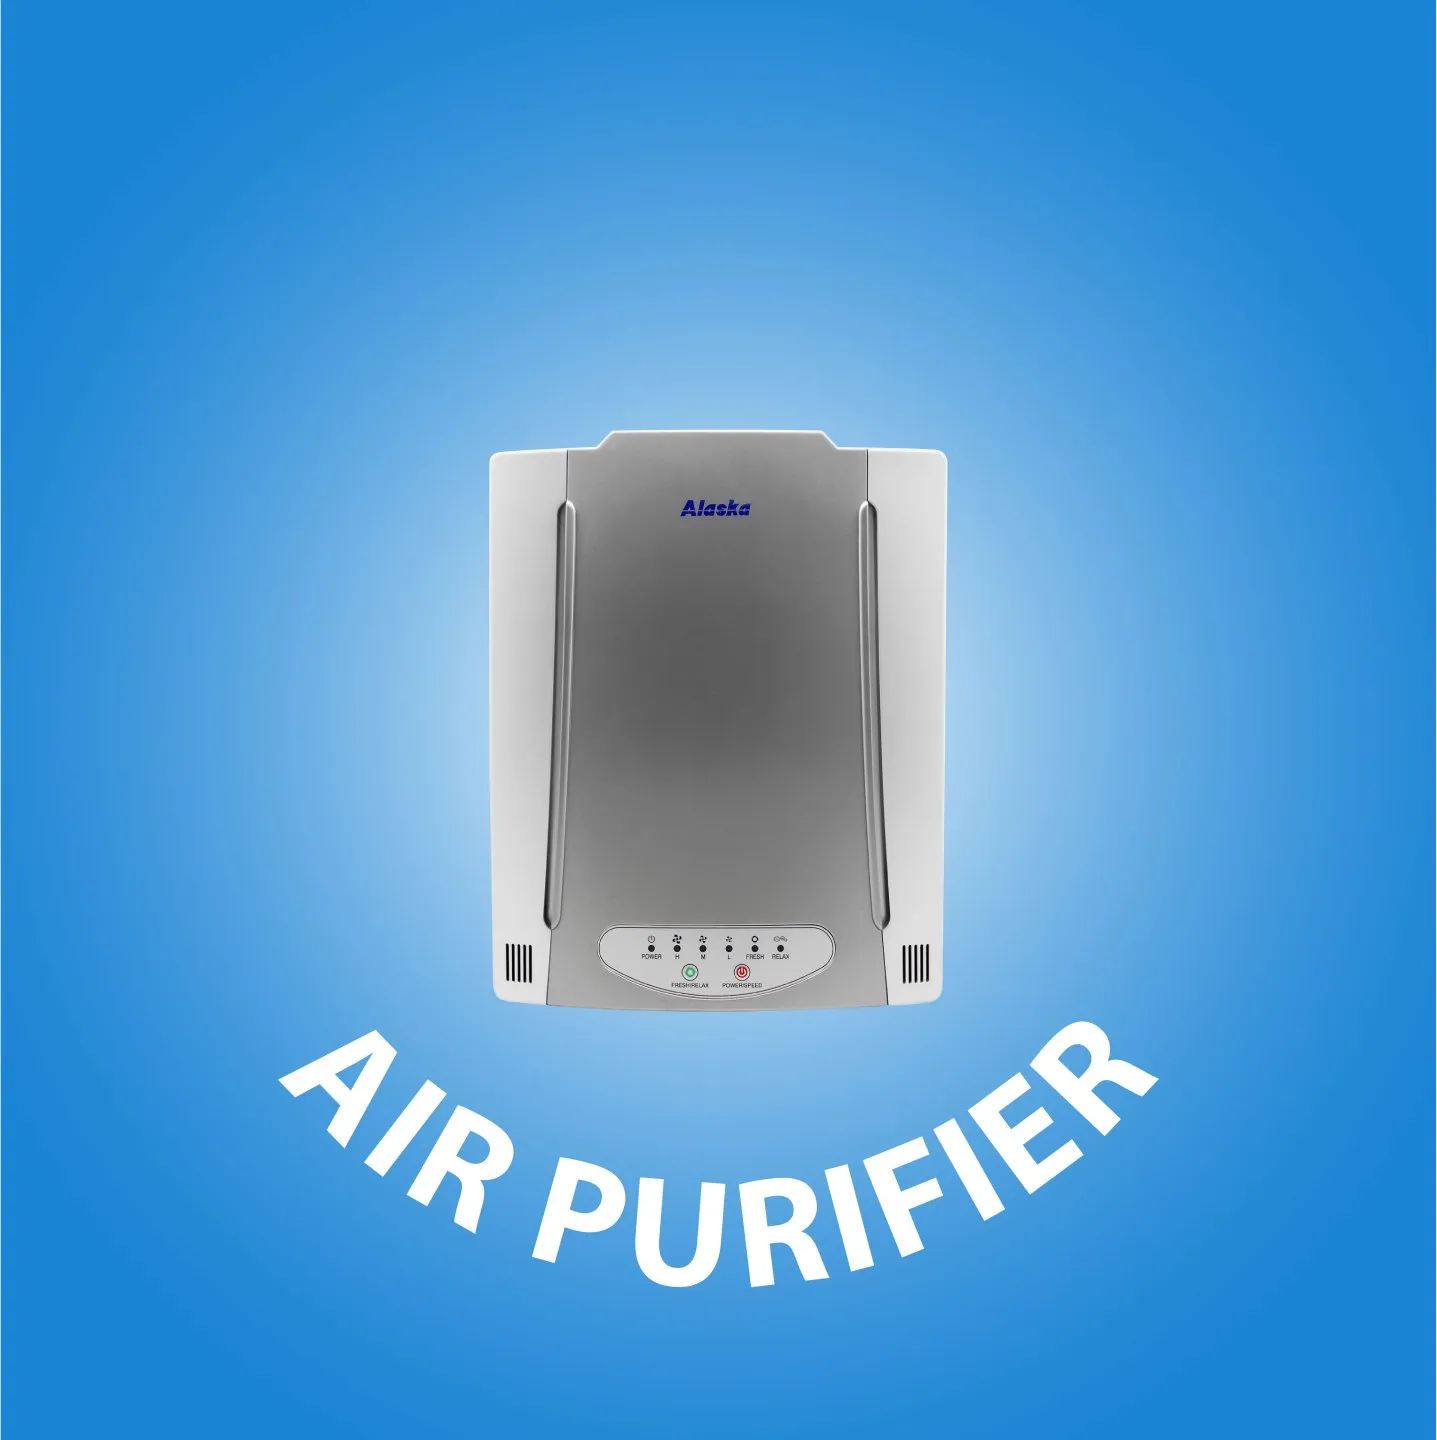  Air Purifier cover kategori website 05